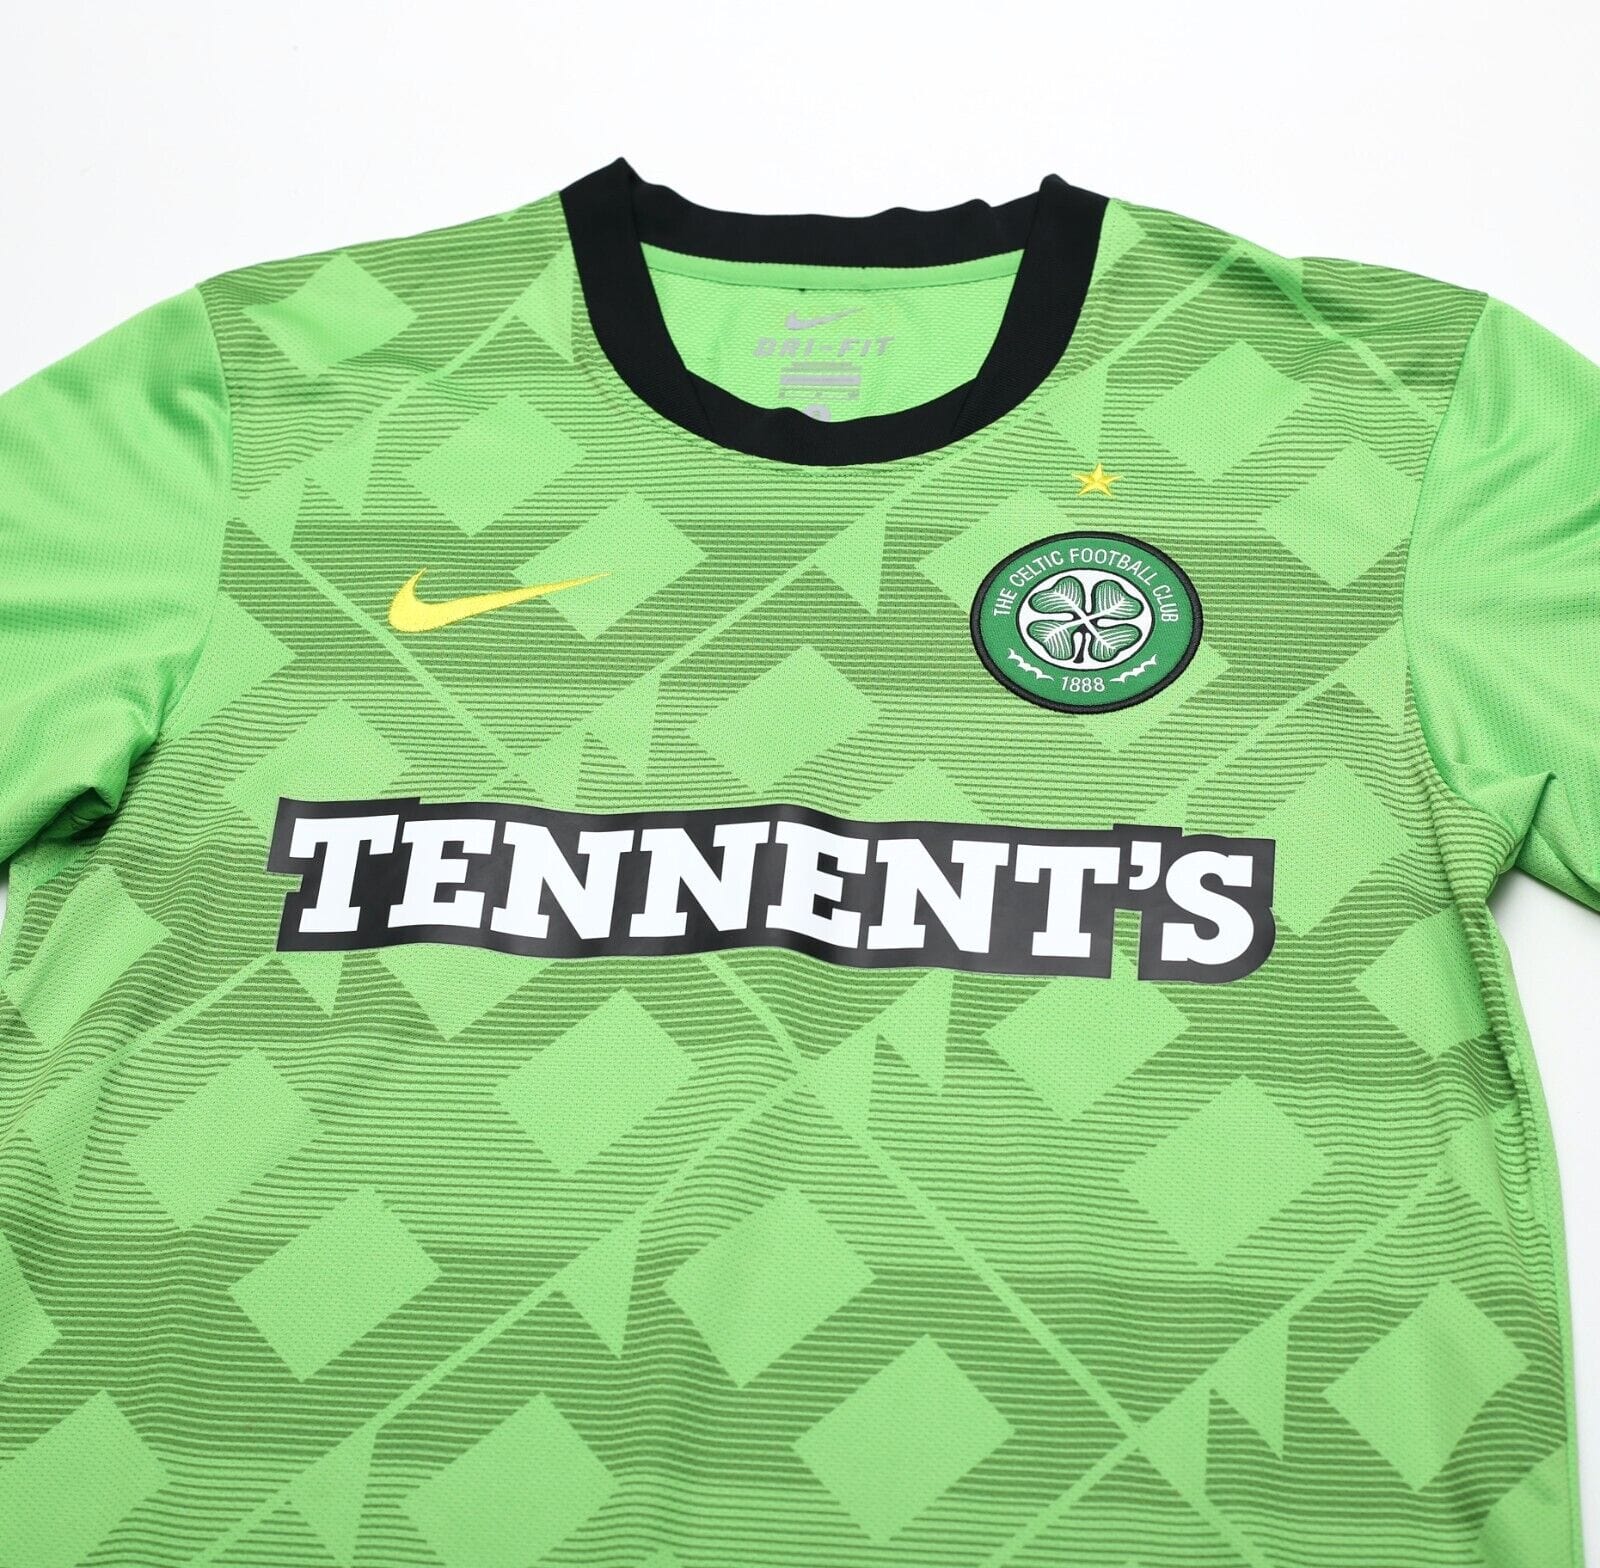 Buy Celtic Shirts, Classic Football Kits